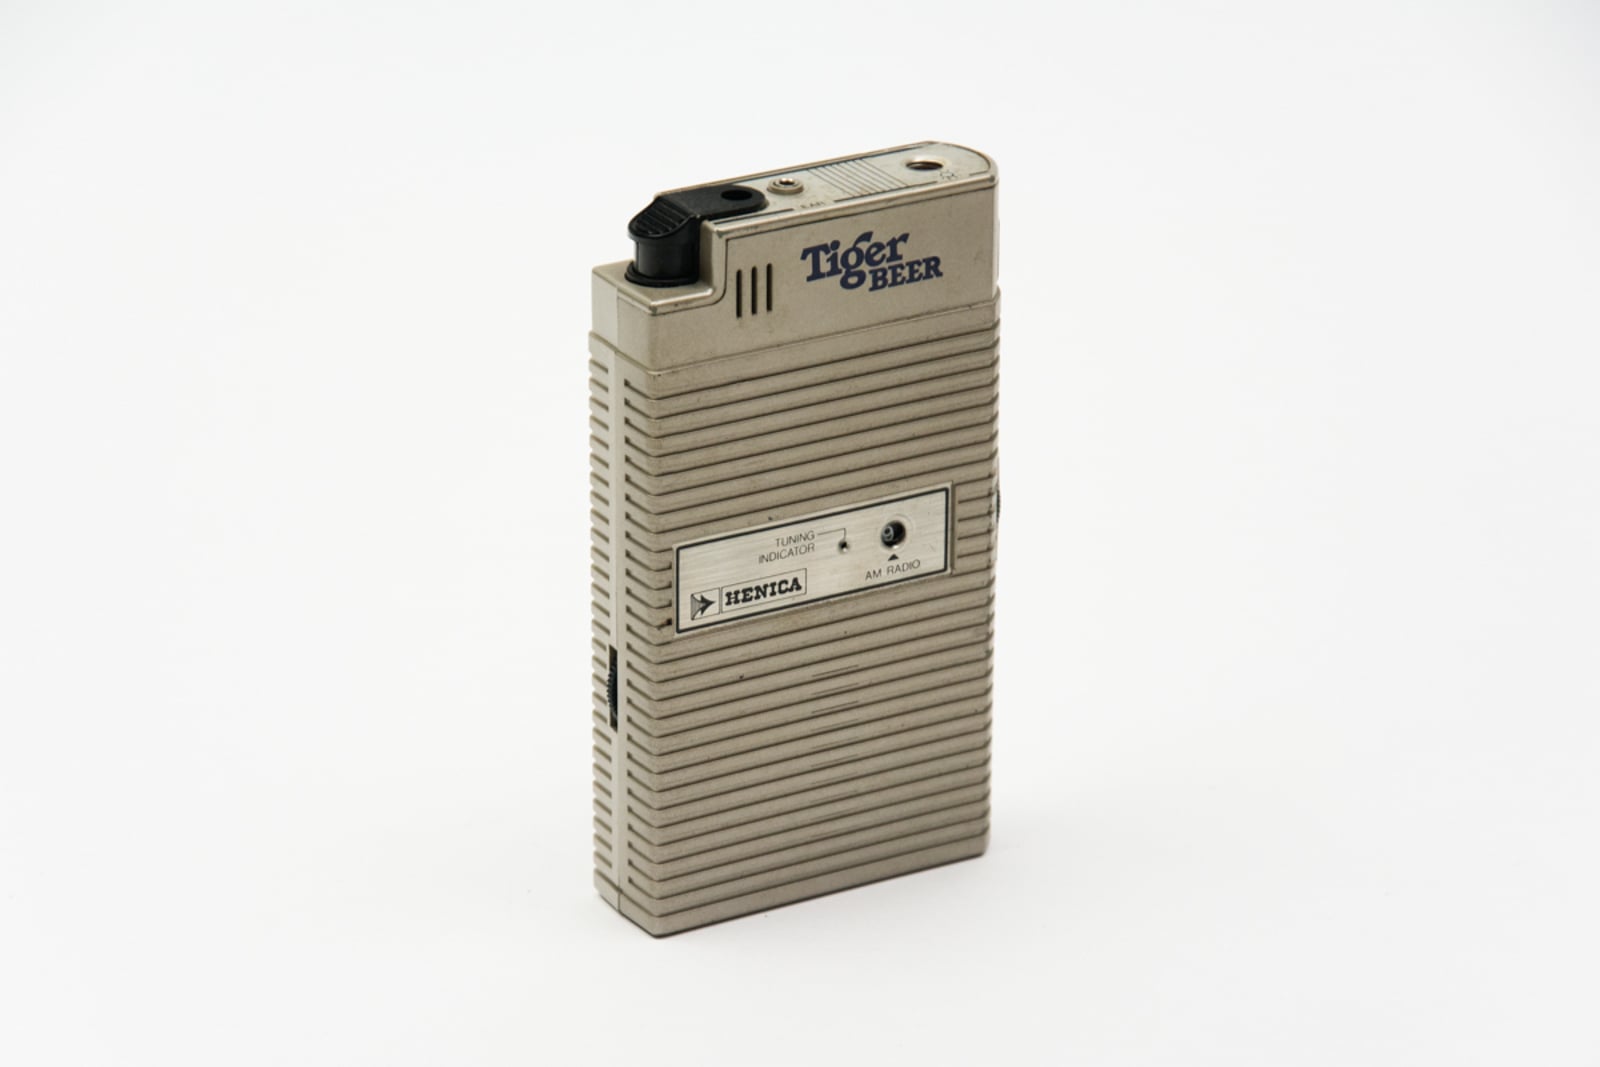 Tiger Beer Radio Lighter Torch Accessories